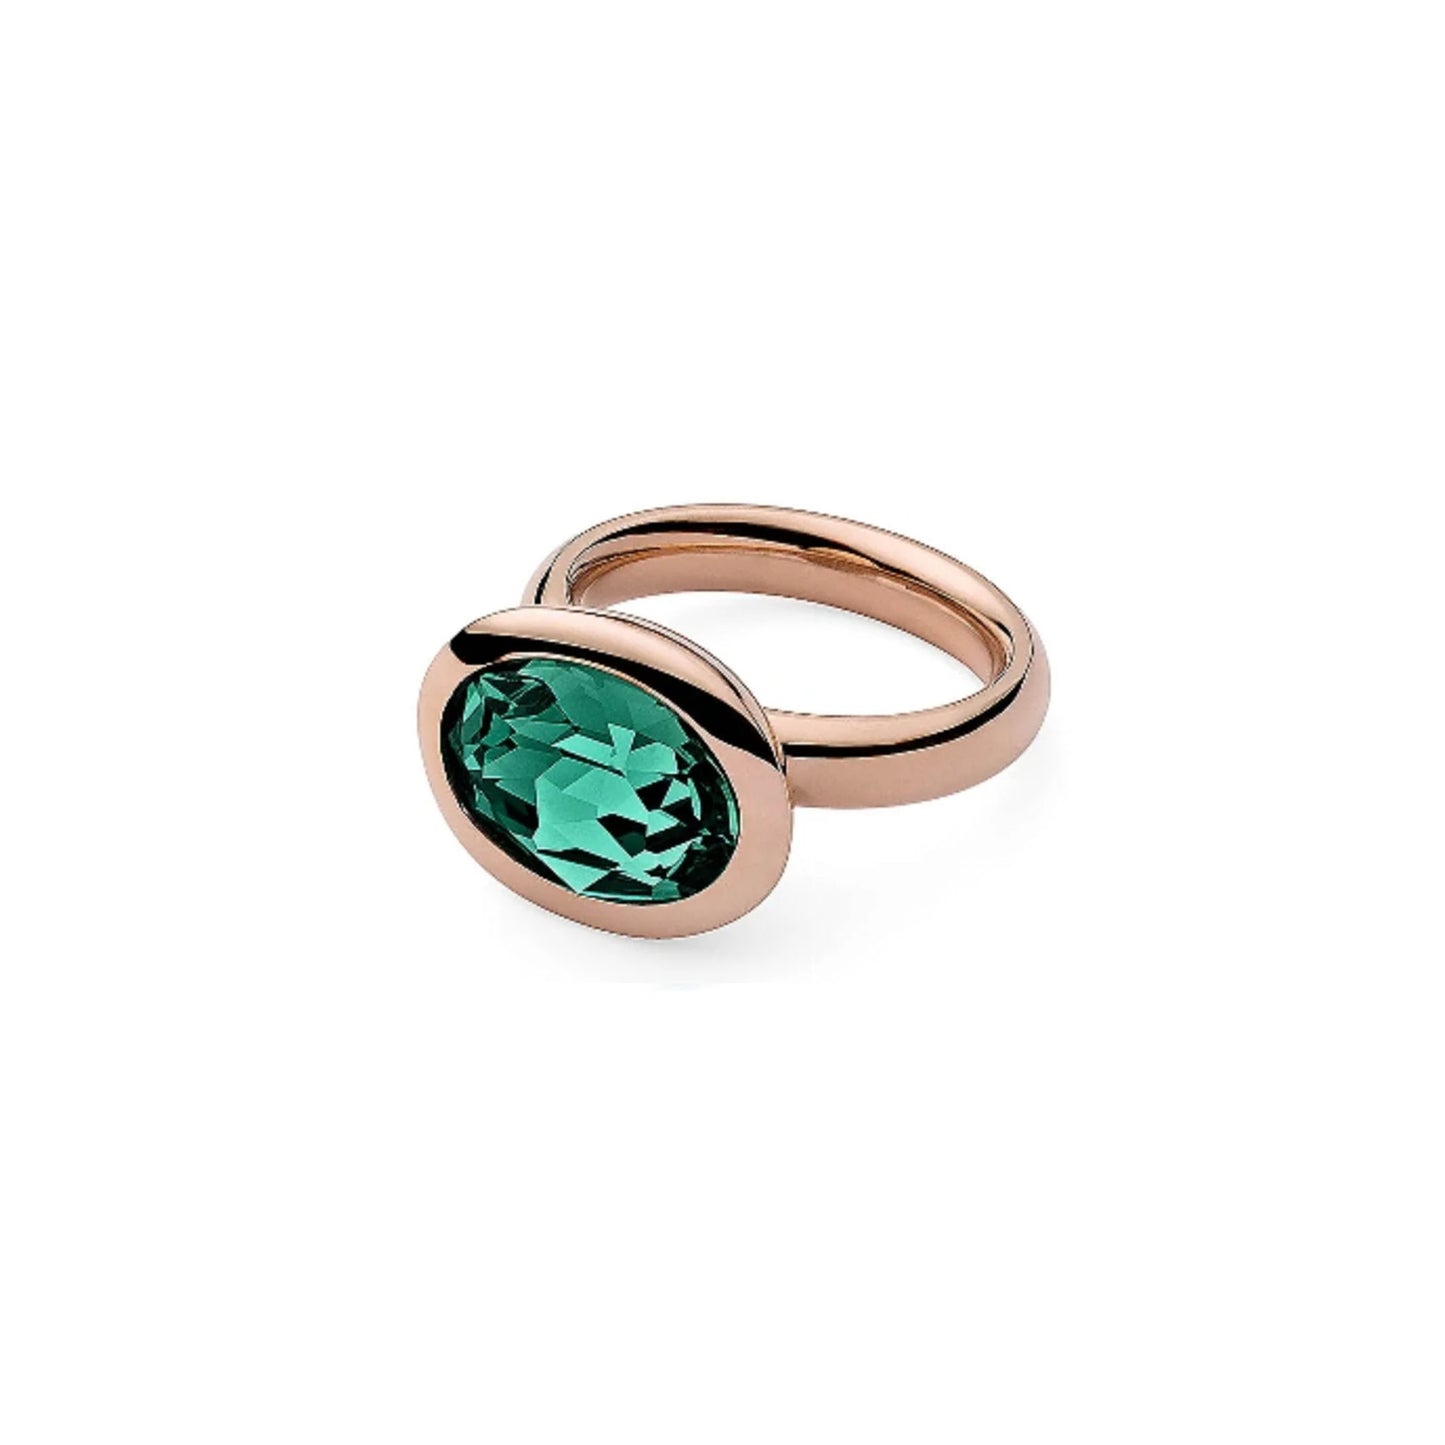 Tivola Ring in Rose Gold - Emerald